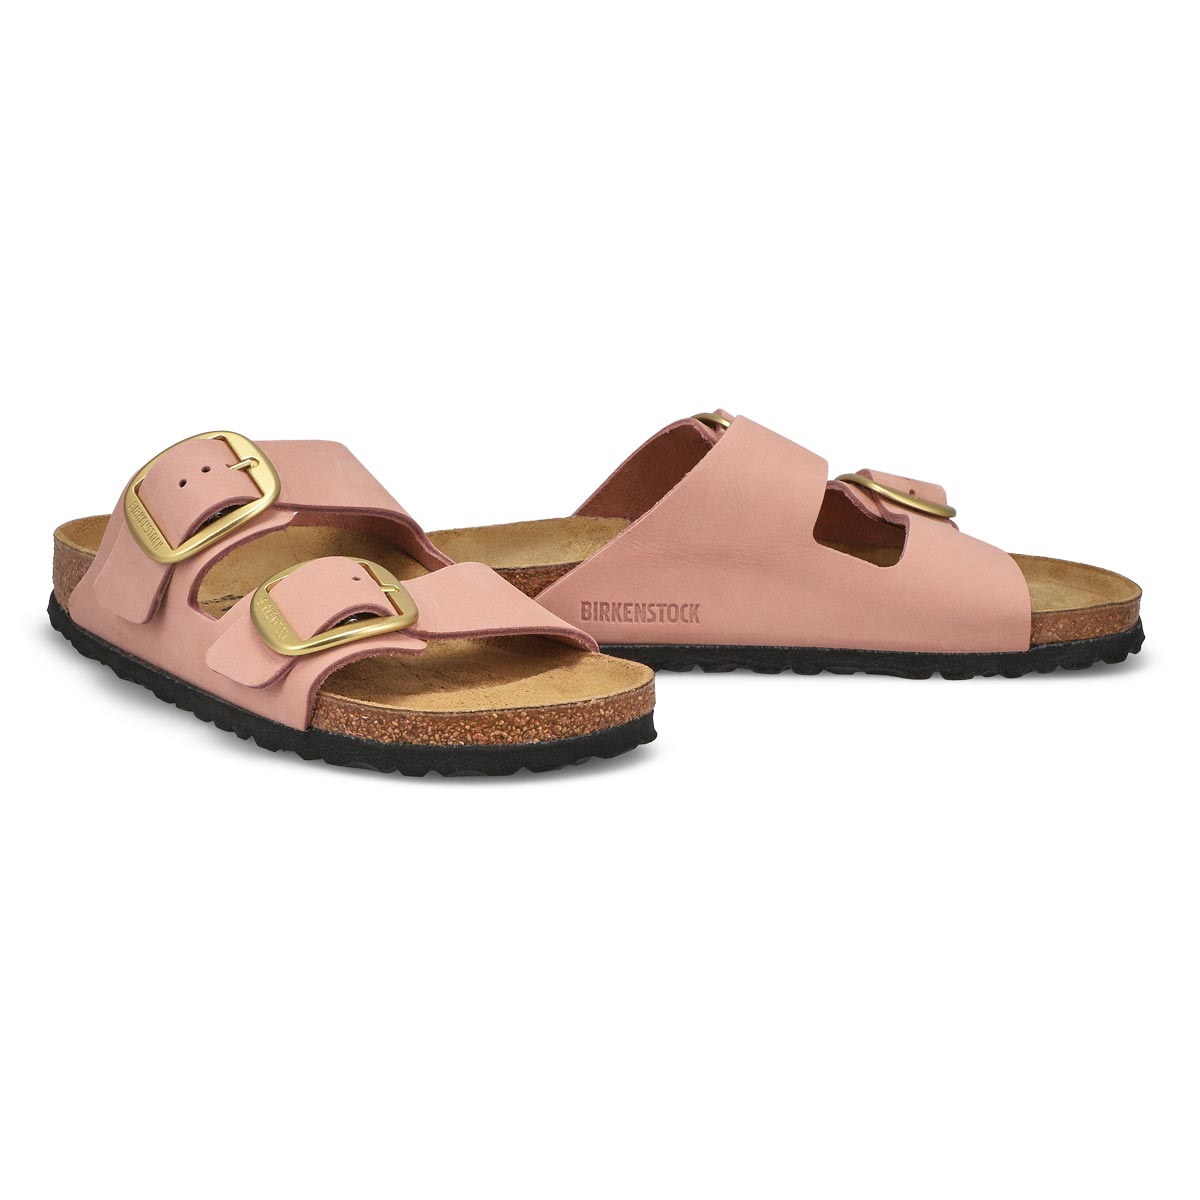 Women's Arizona Big Buckle Narrow 2-Strap Sandal - Soft Pink